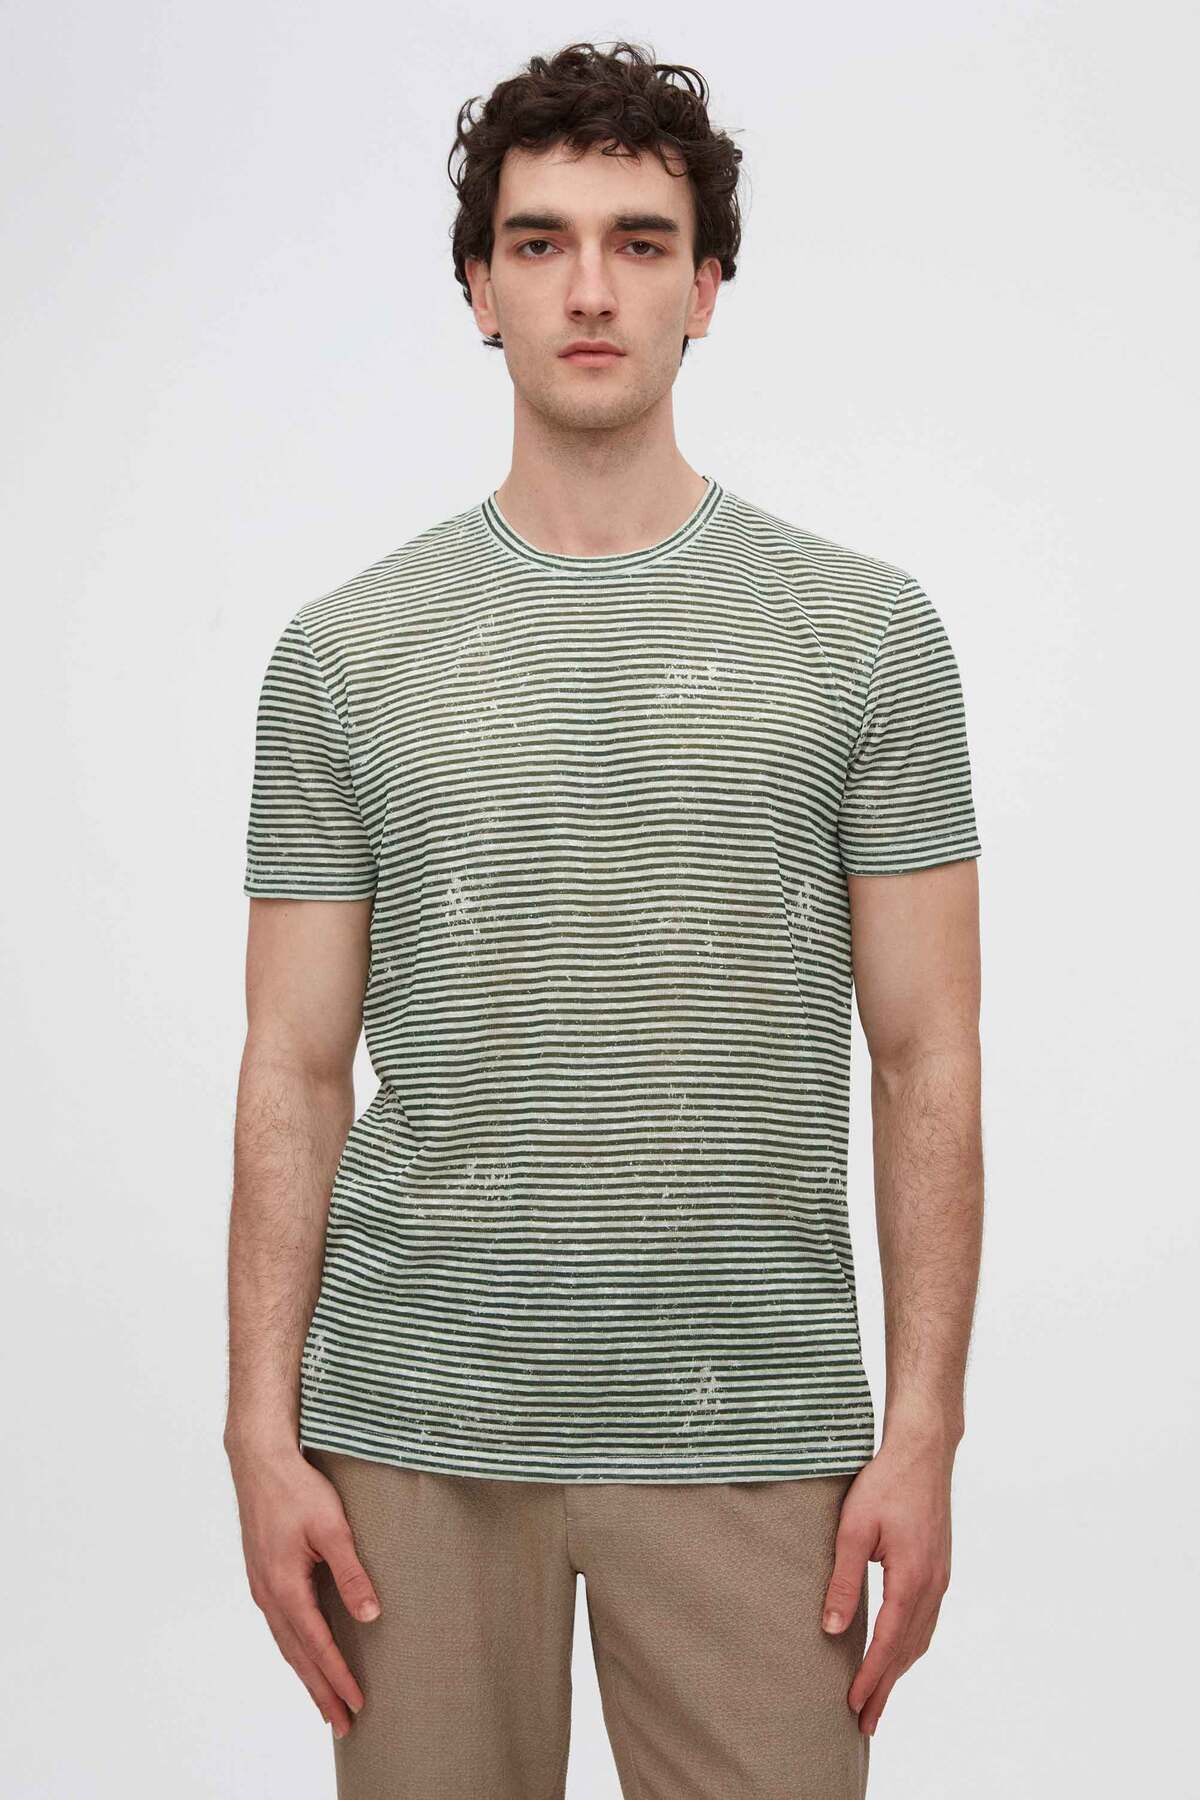 TWN Slim Fit Yeşil Çizgi Baskılı T-shirt